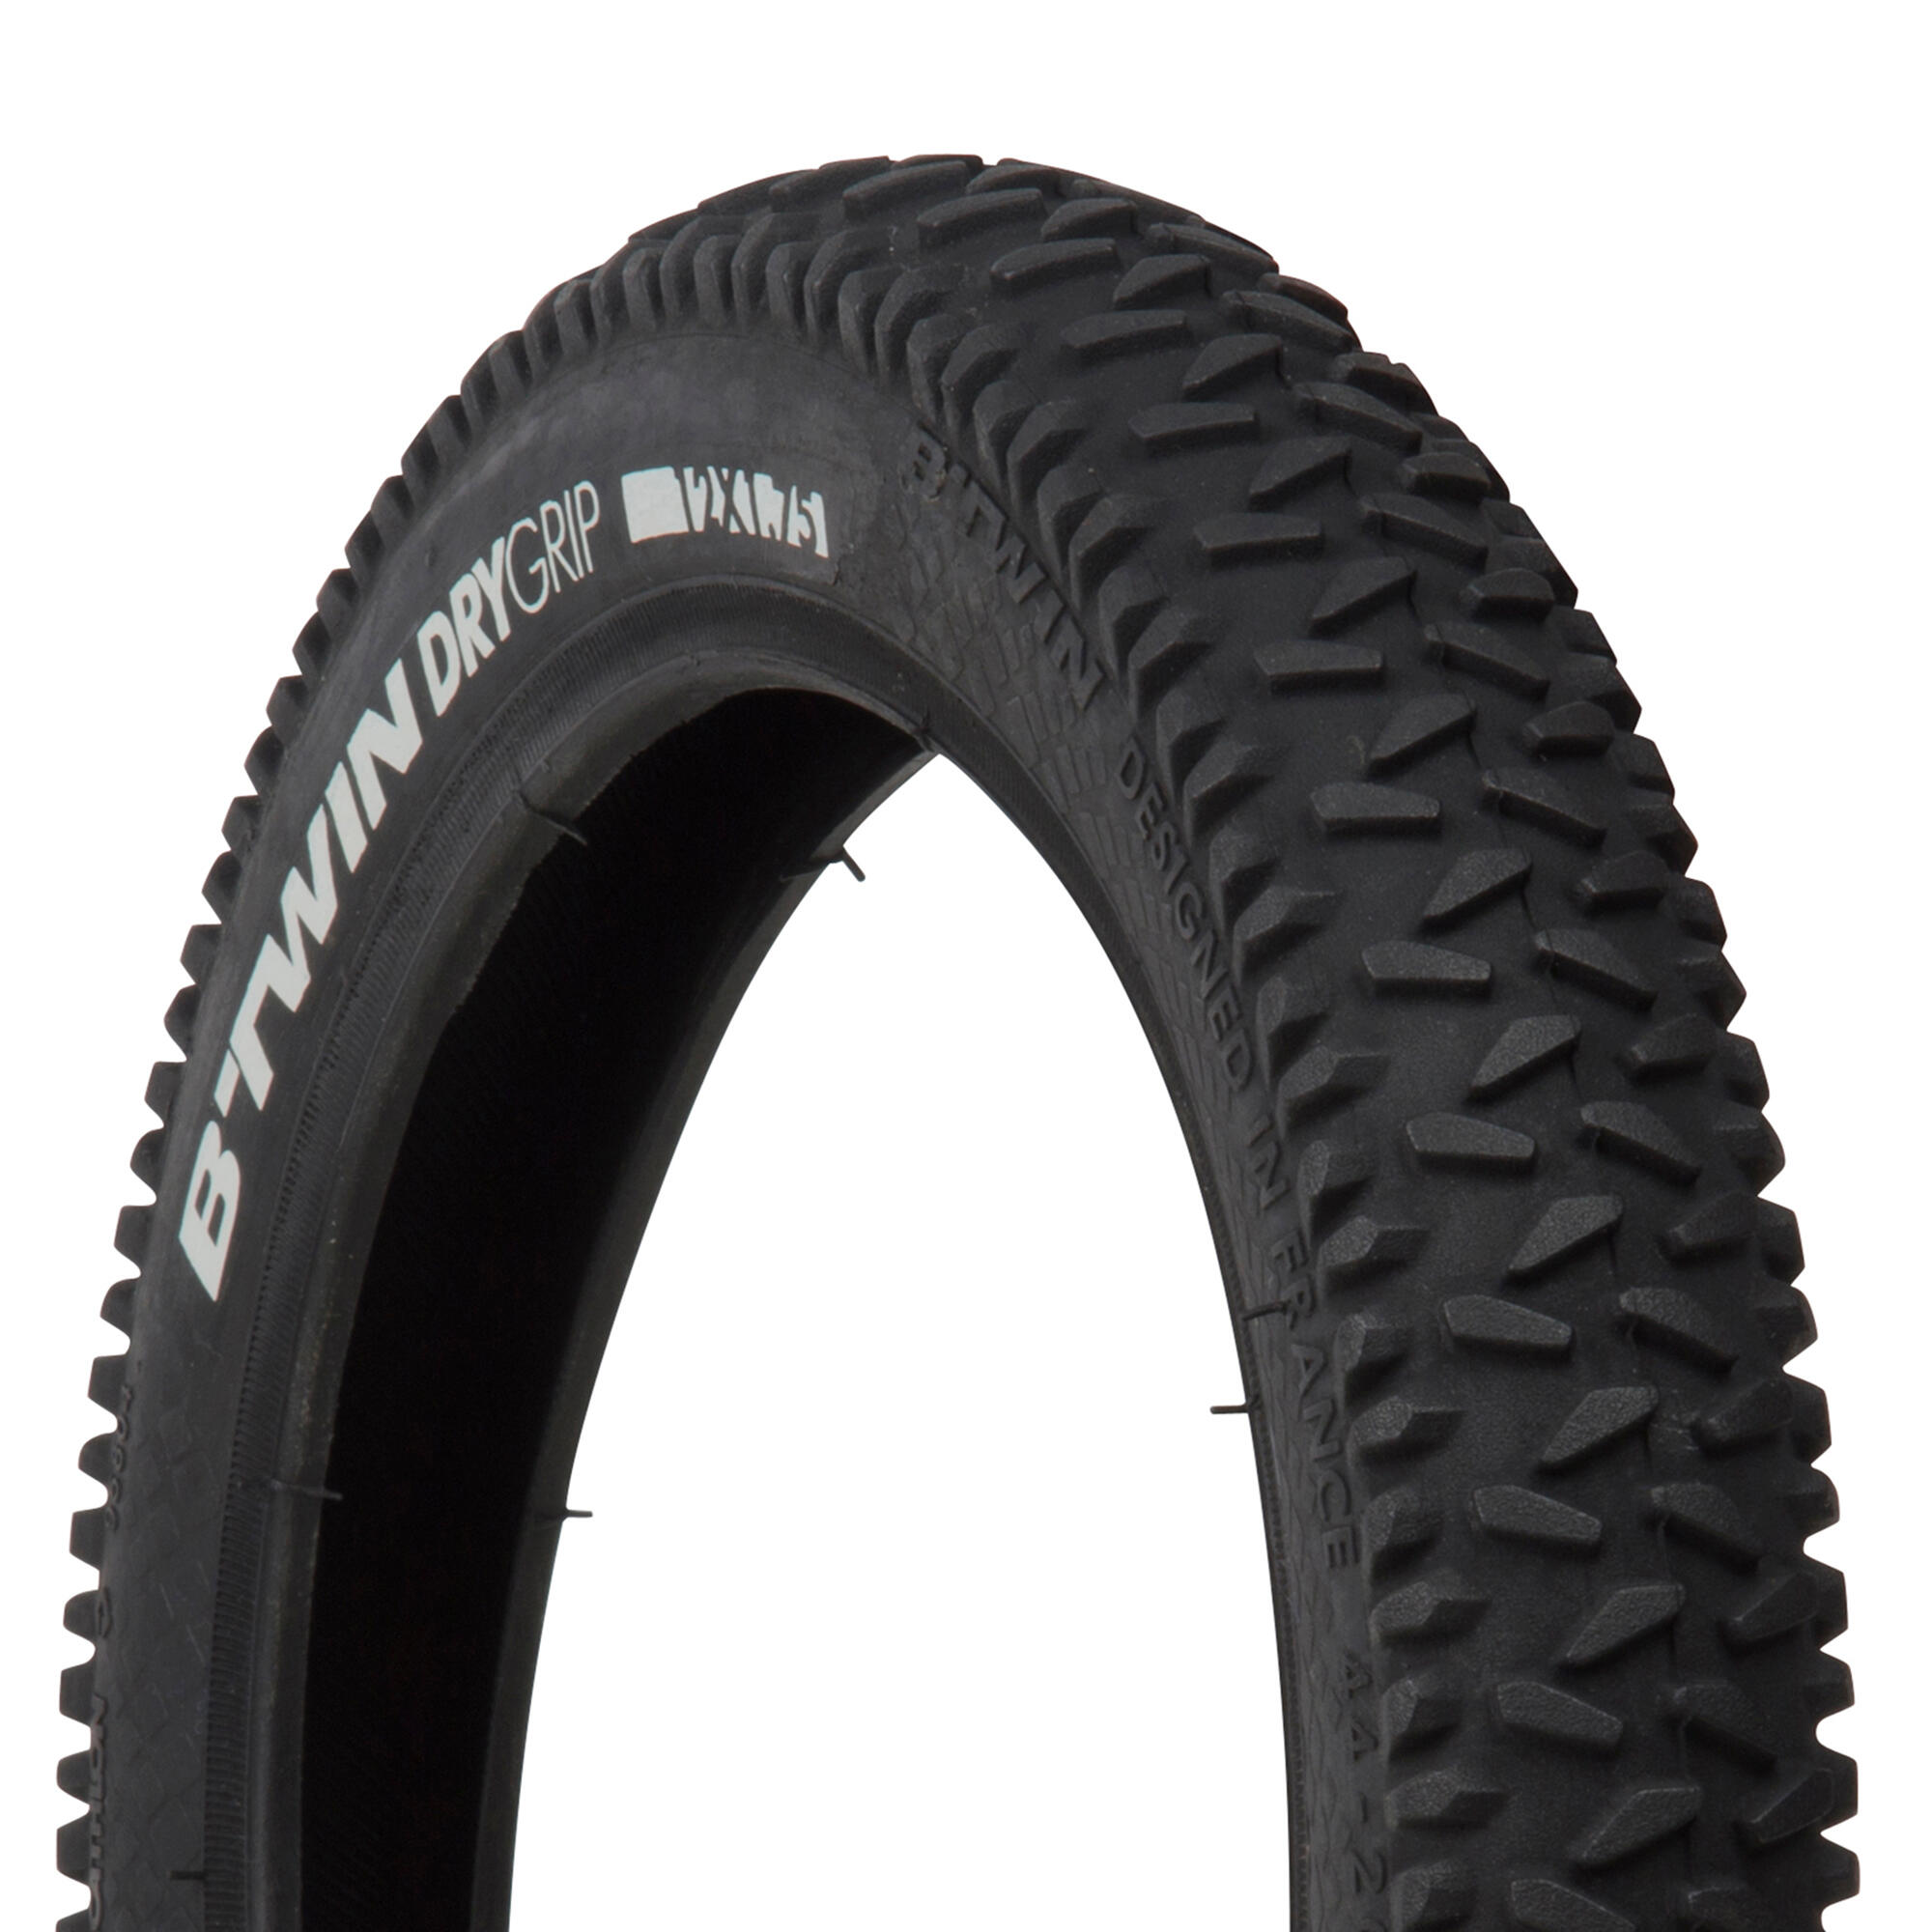 12 inch bike tire